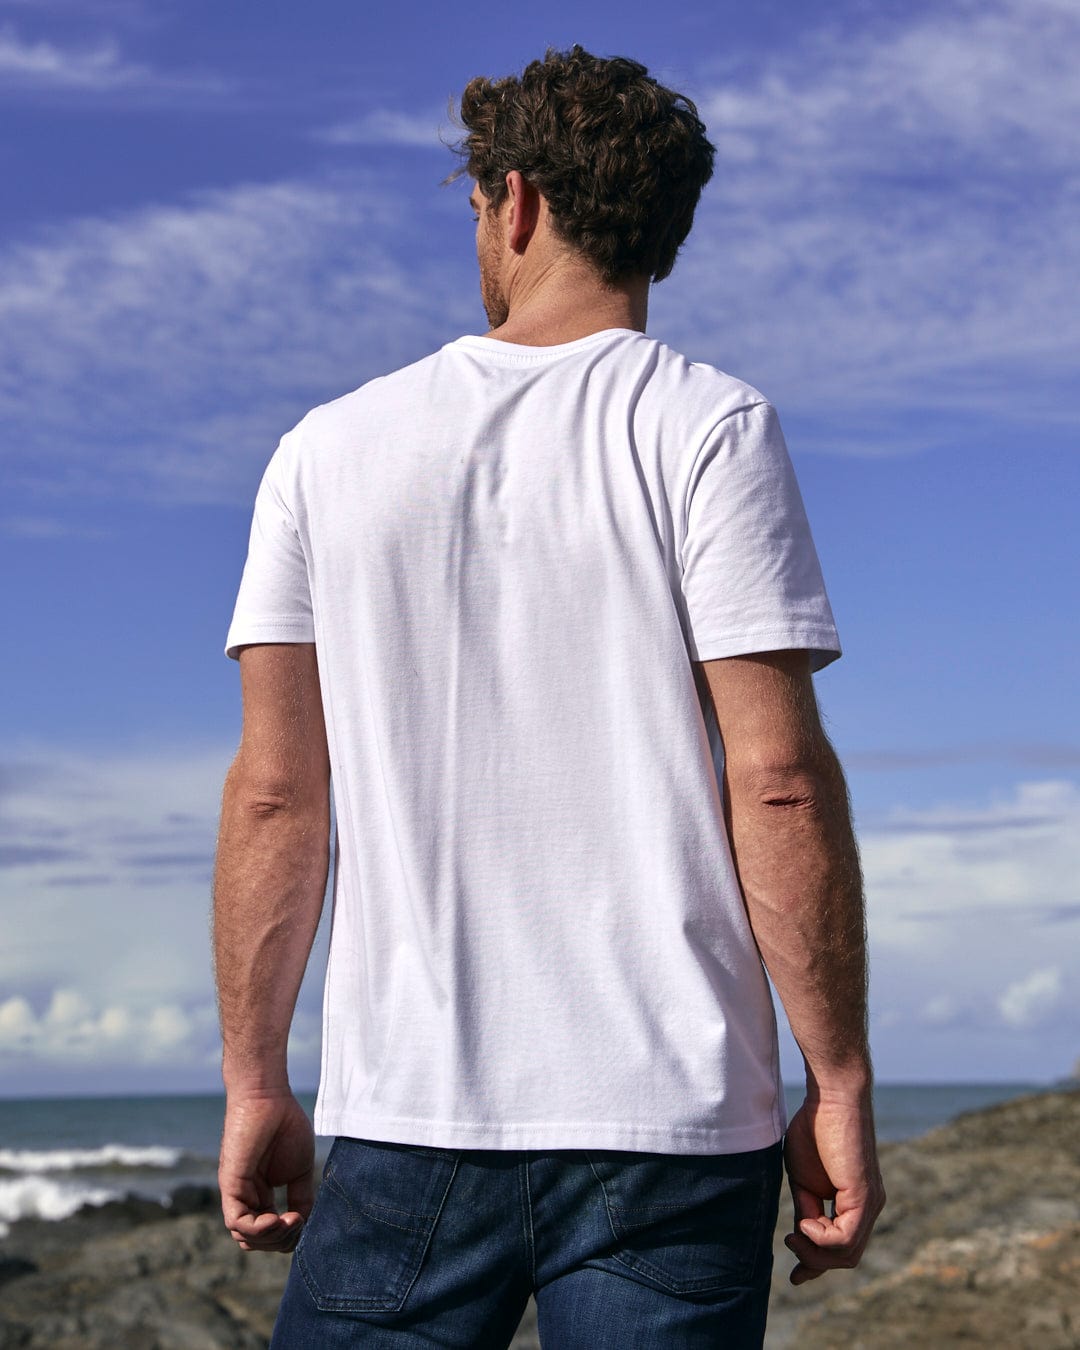 A man wearing a white Mountain Logo - Mens Short Sleeve T-Shirt - White featuring the Saltrock branding, standing on a rocky beach.